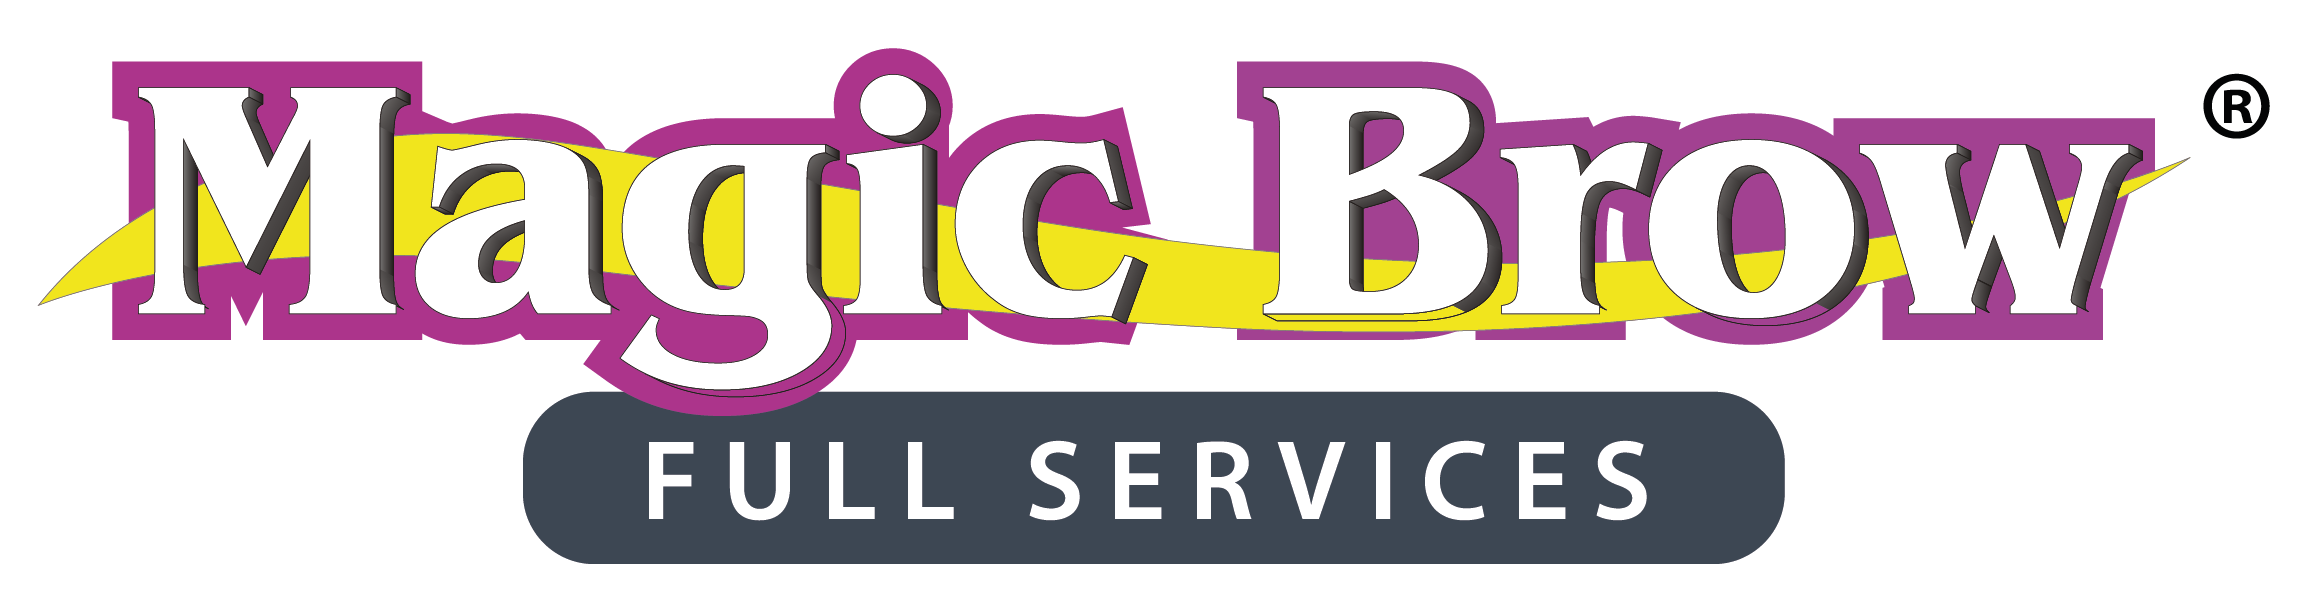 Magic Brow Logos_Full Services